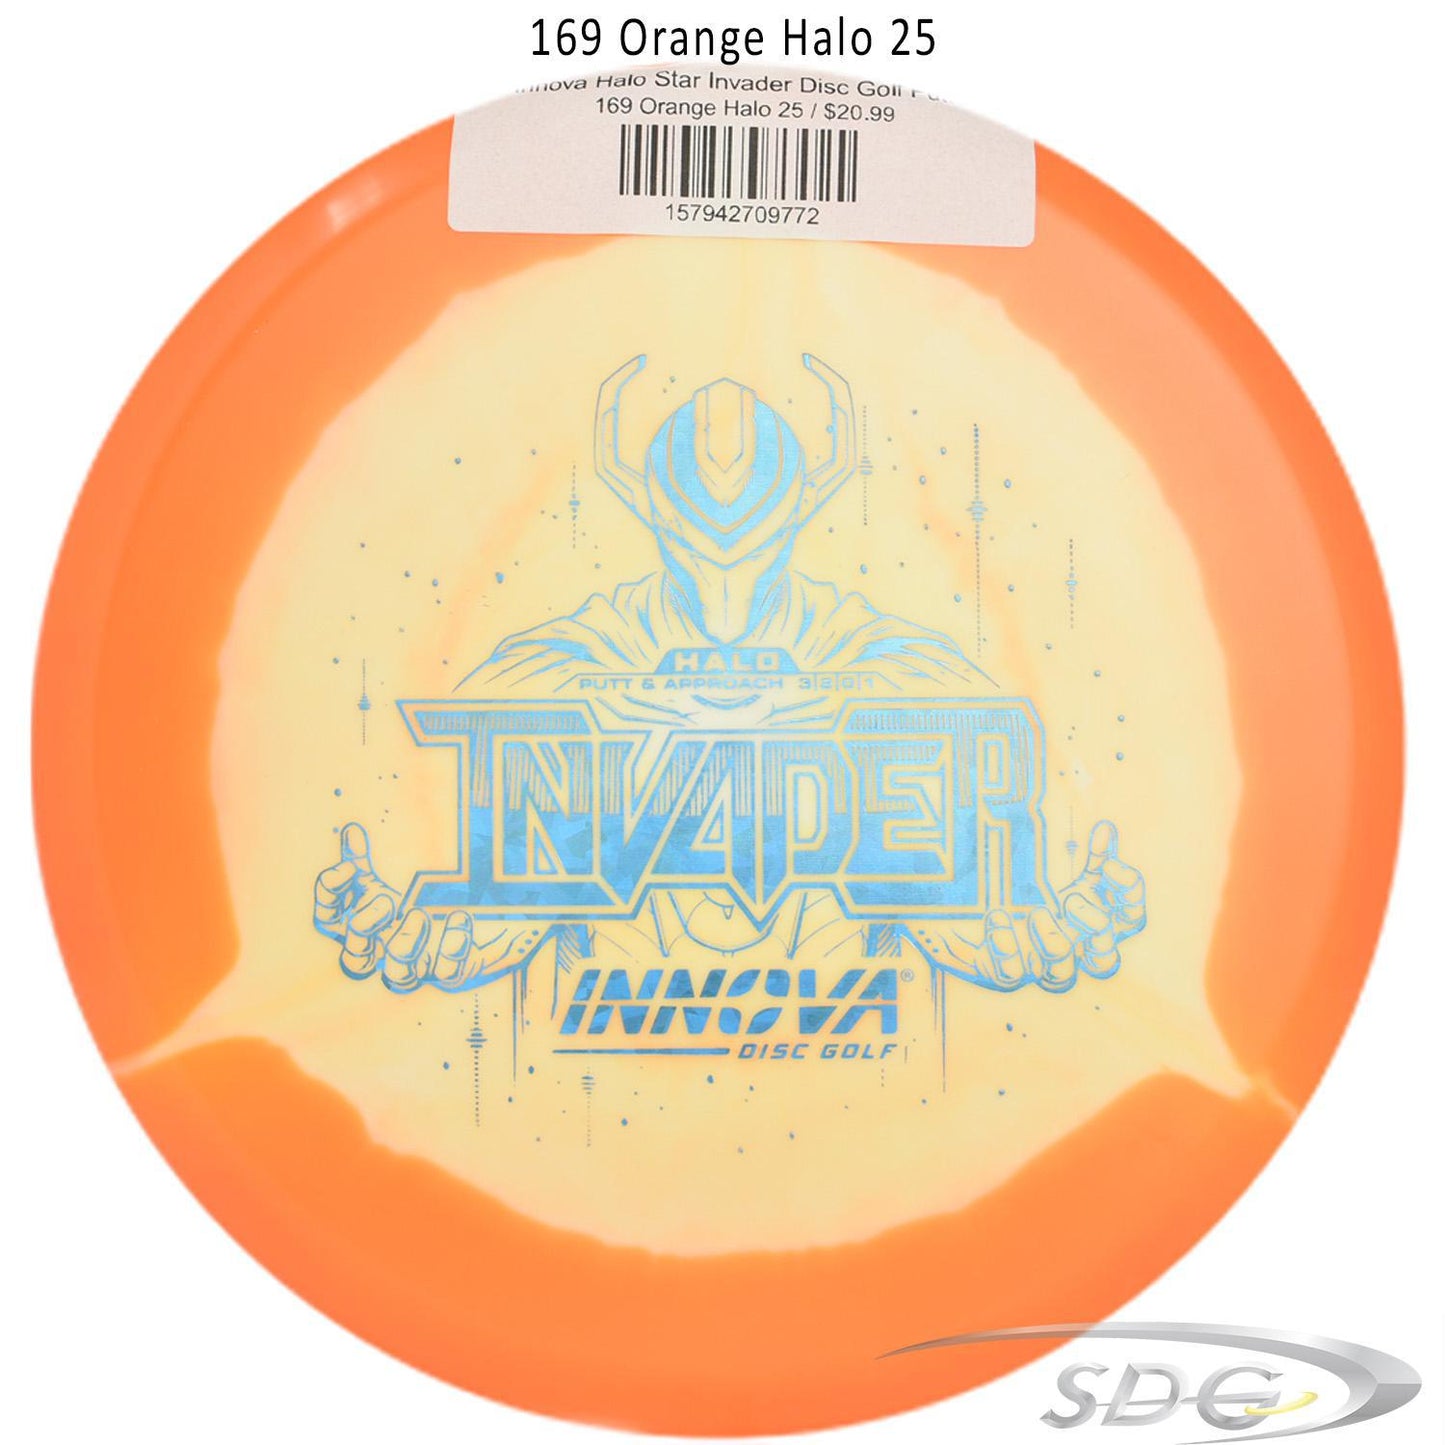 innova-halo-star-invader-disc-golf-putter 169 Orange Halo 25 